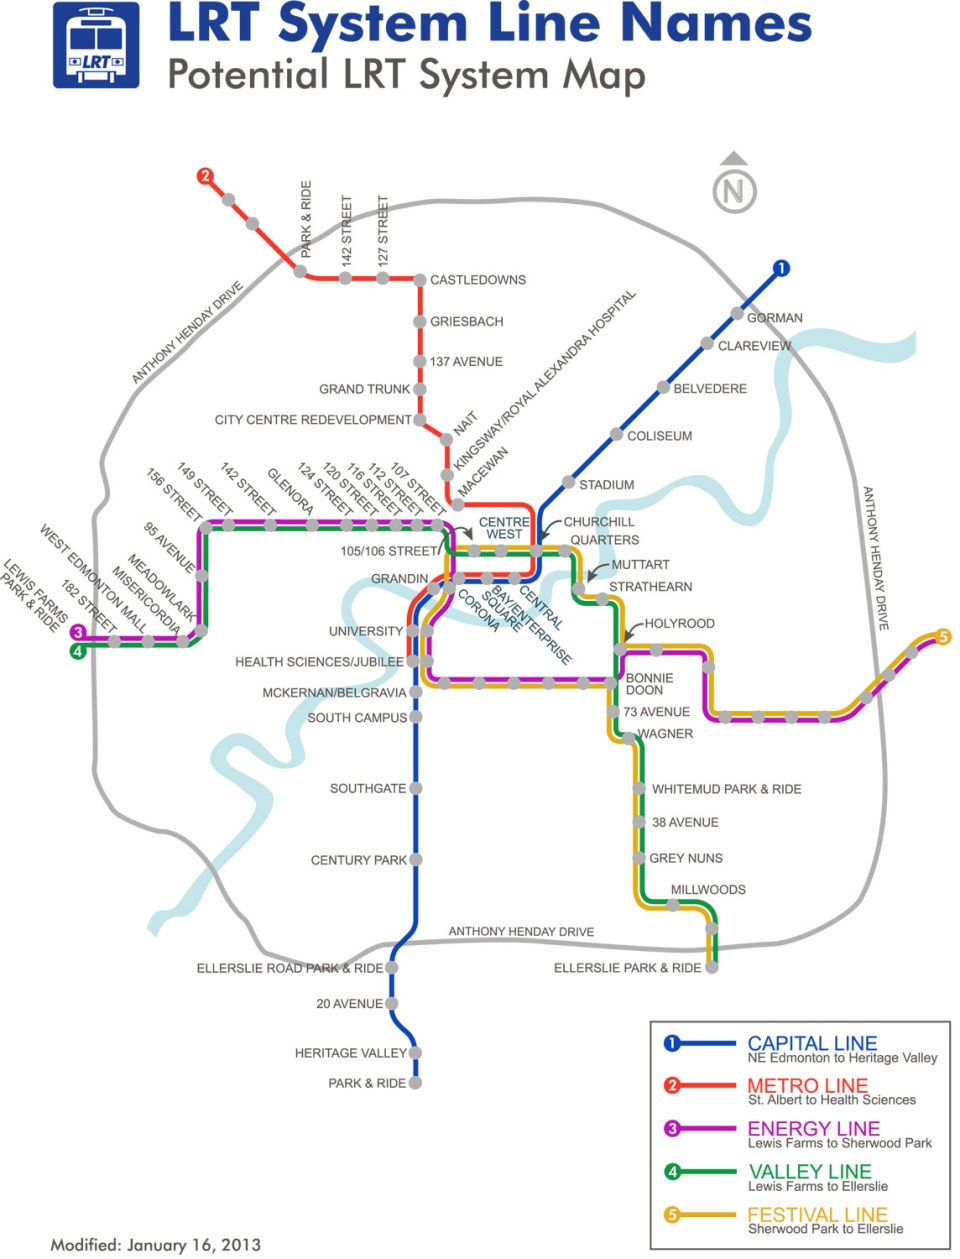 Approved LRT Line names